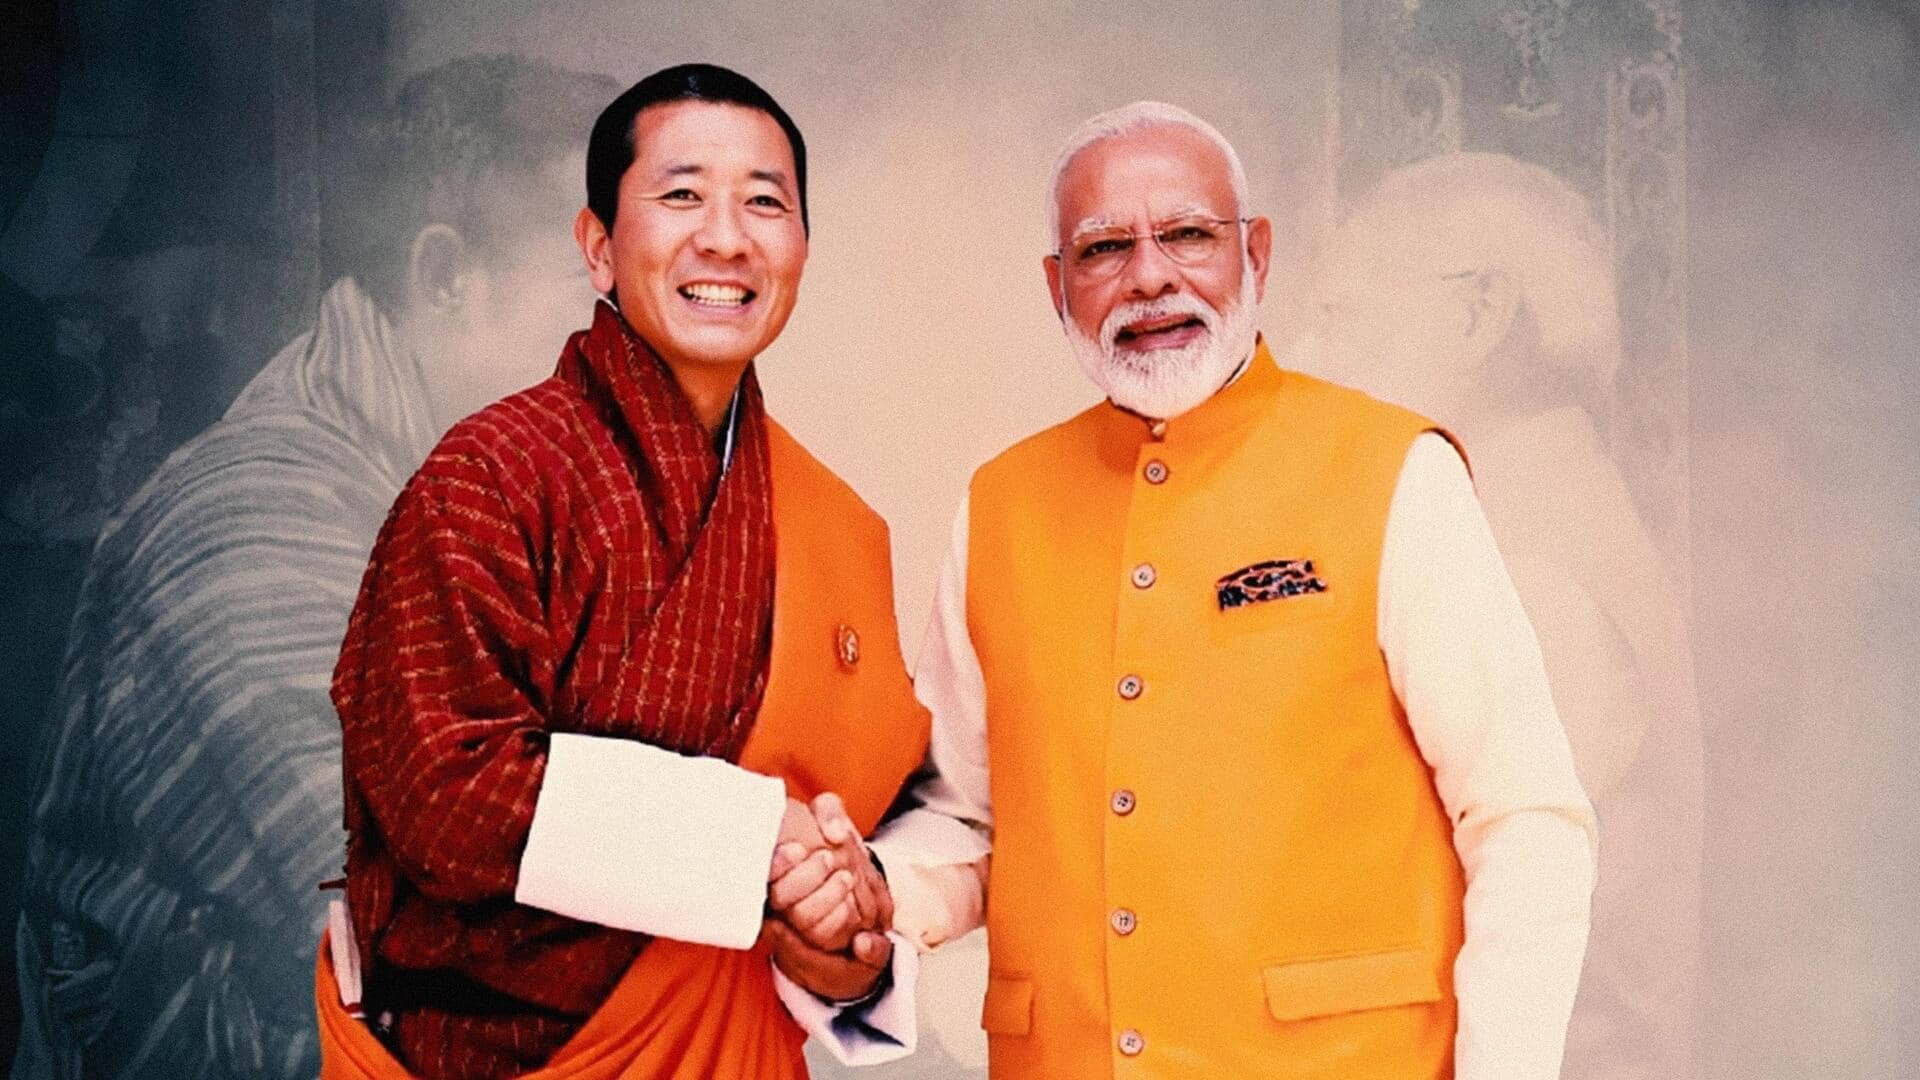 PM Modi awarded Bhutan's highest civilian award